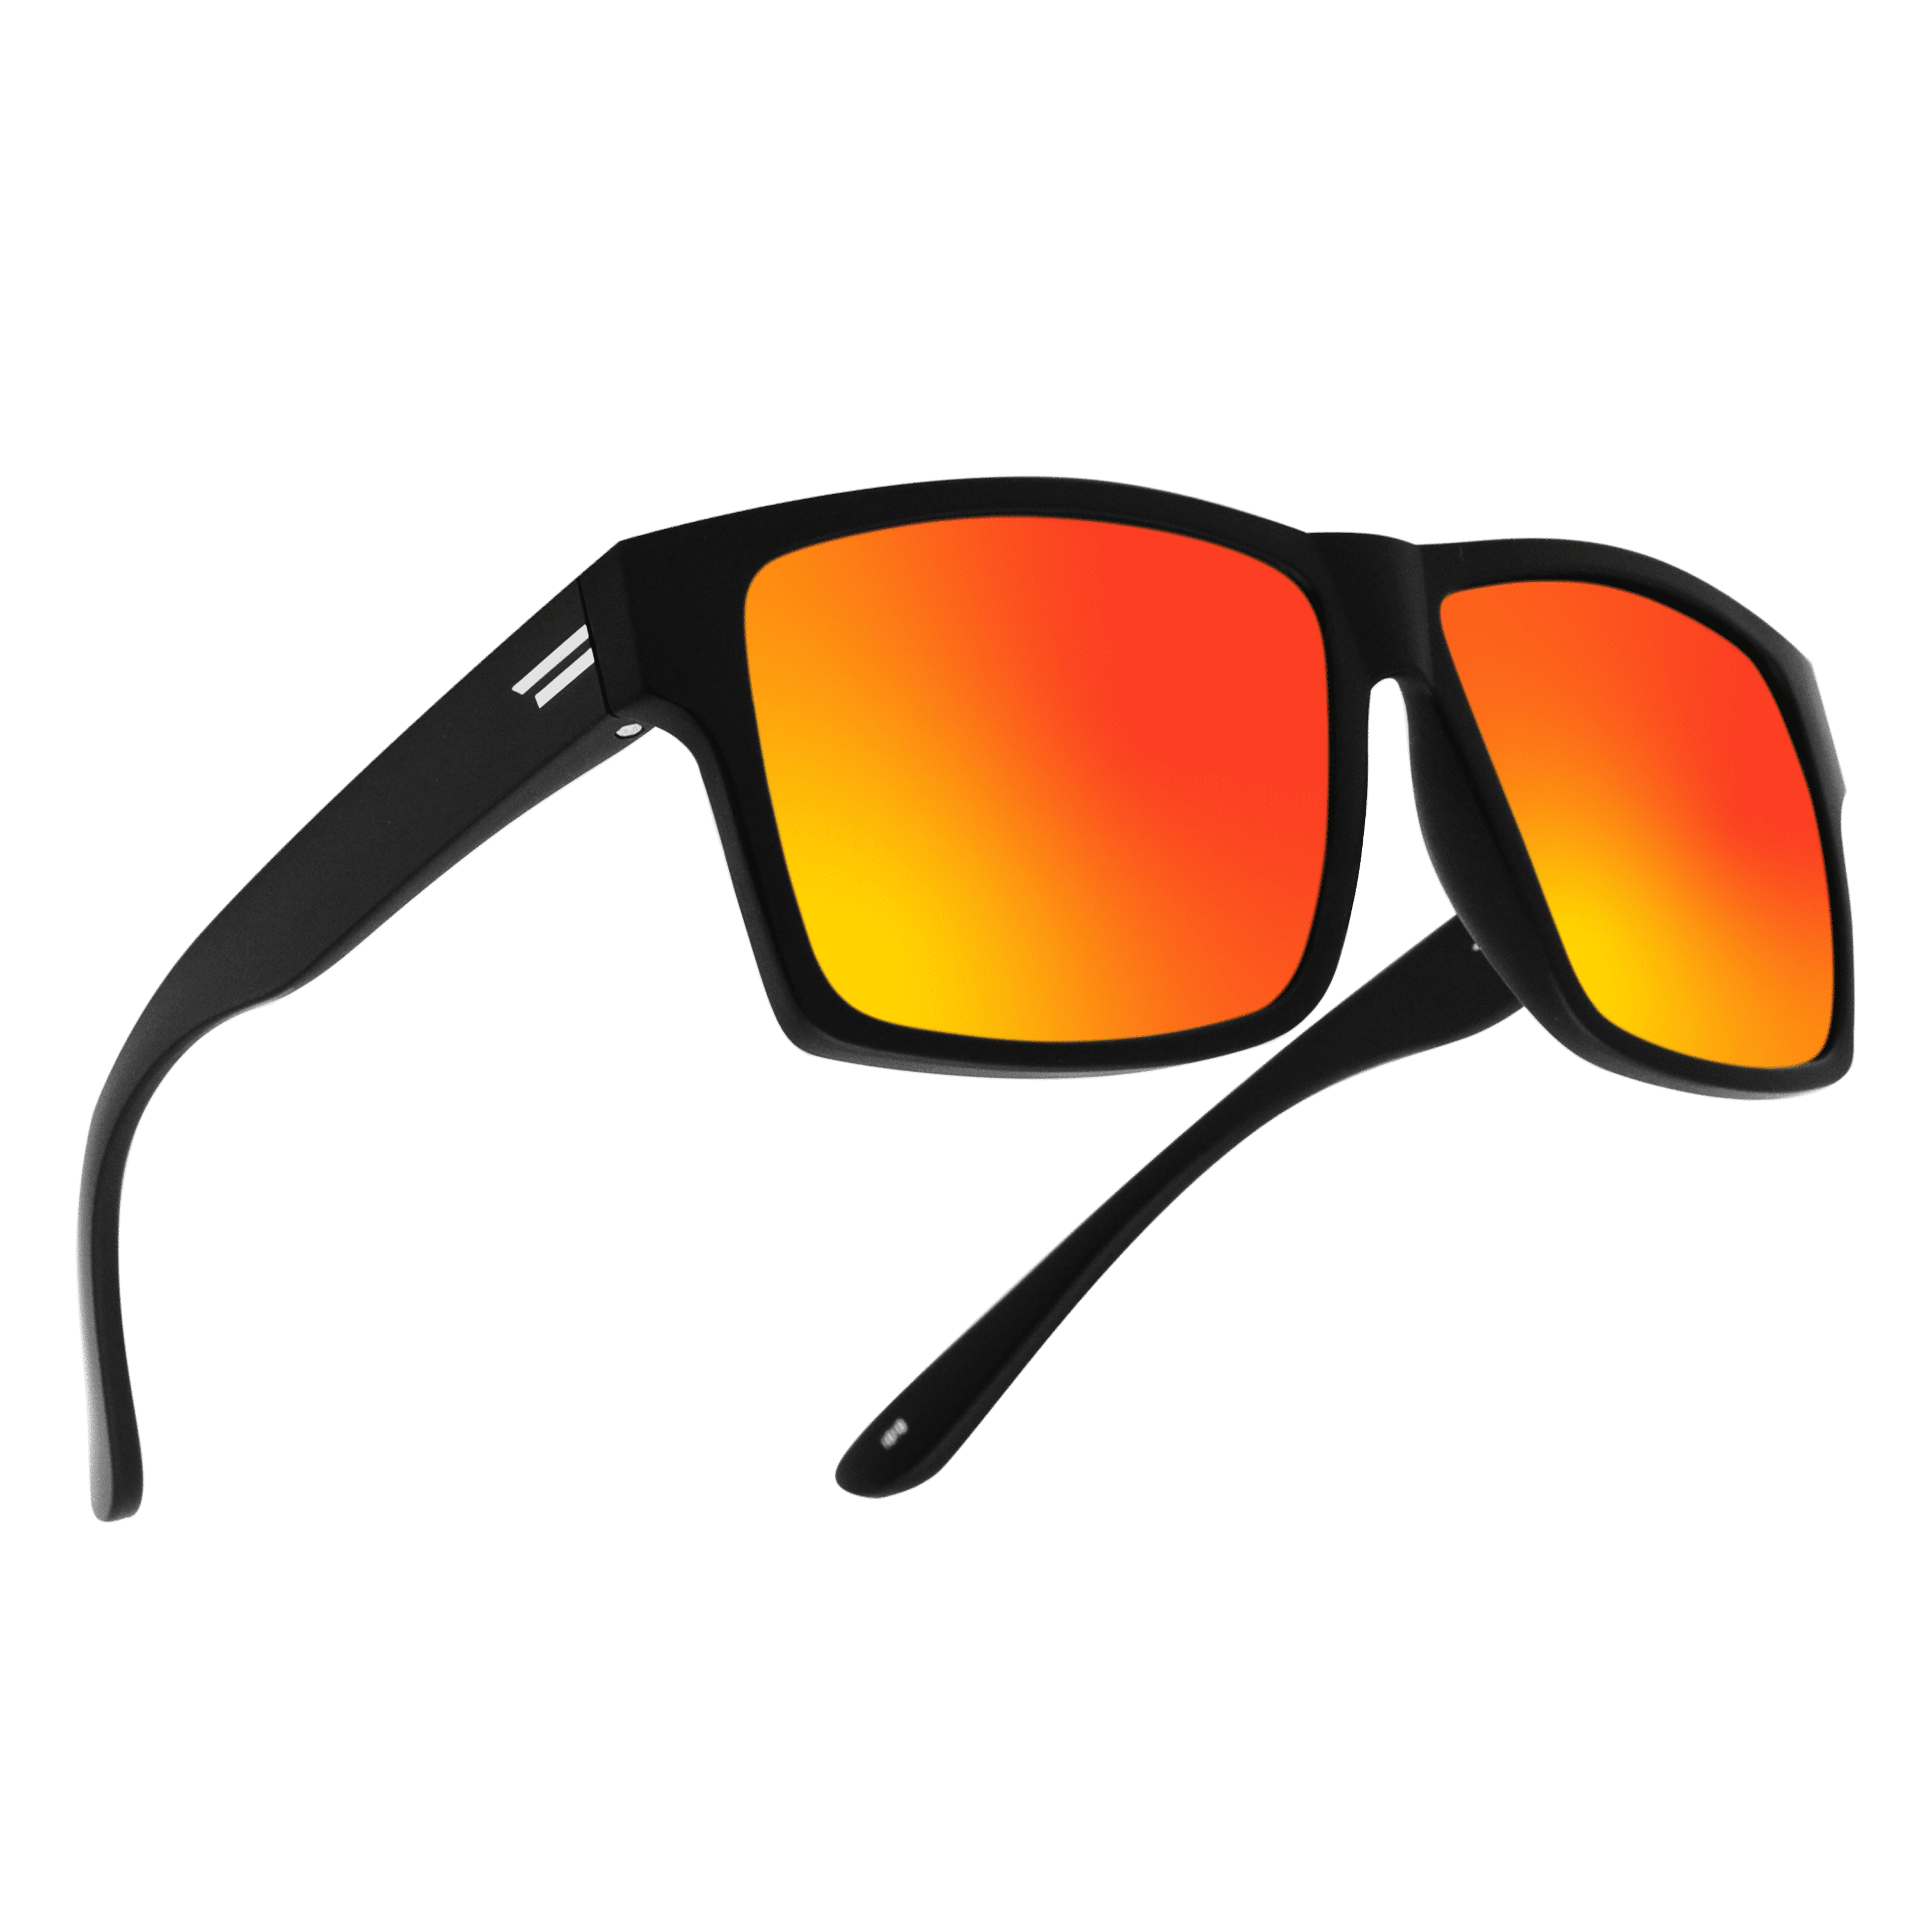 Polarized Lens Sunglasses TR90 Super Lite Flexible Durable Unbreakable Frame 